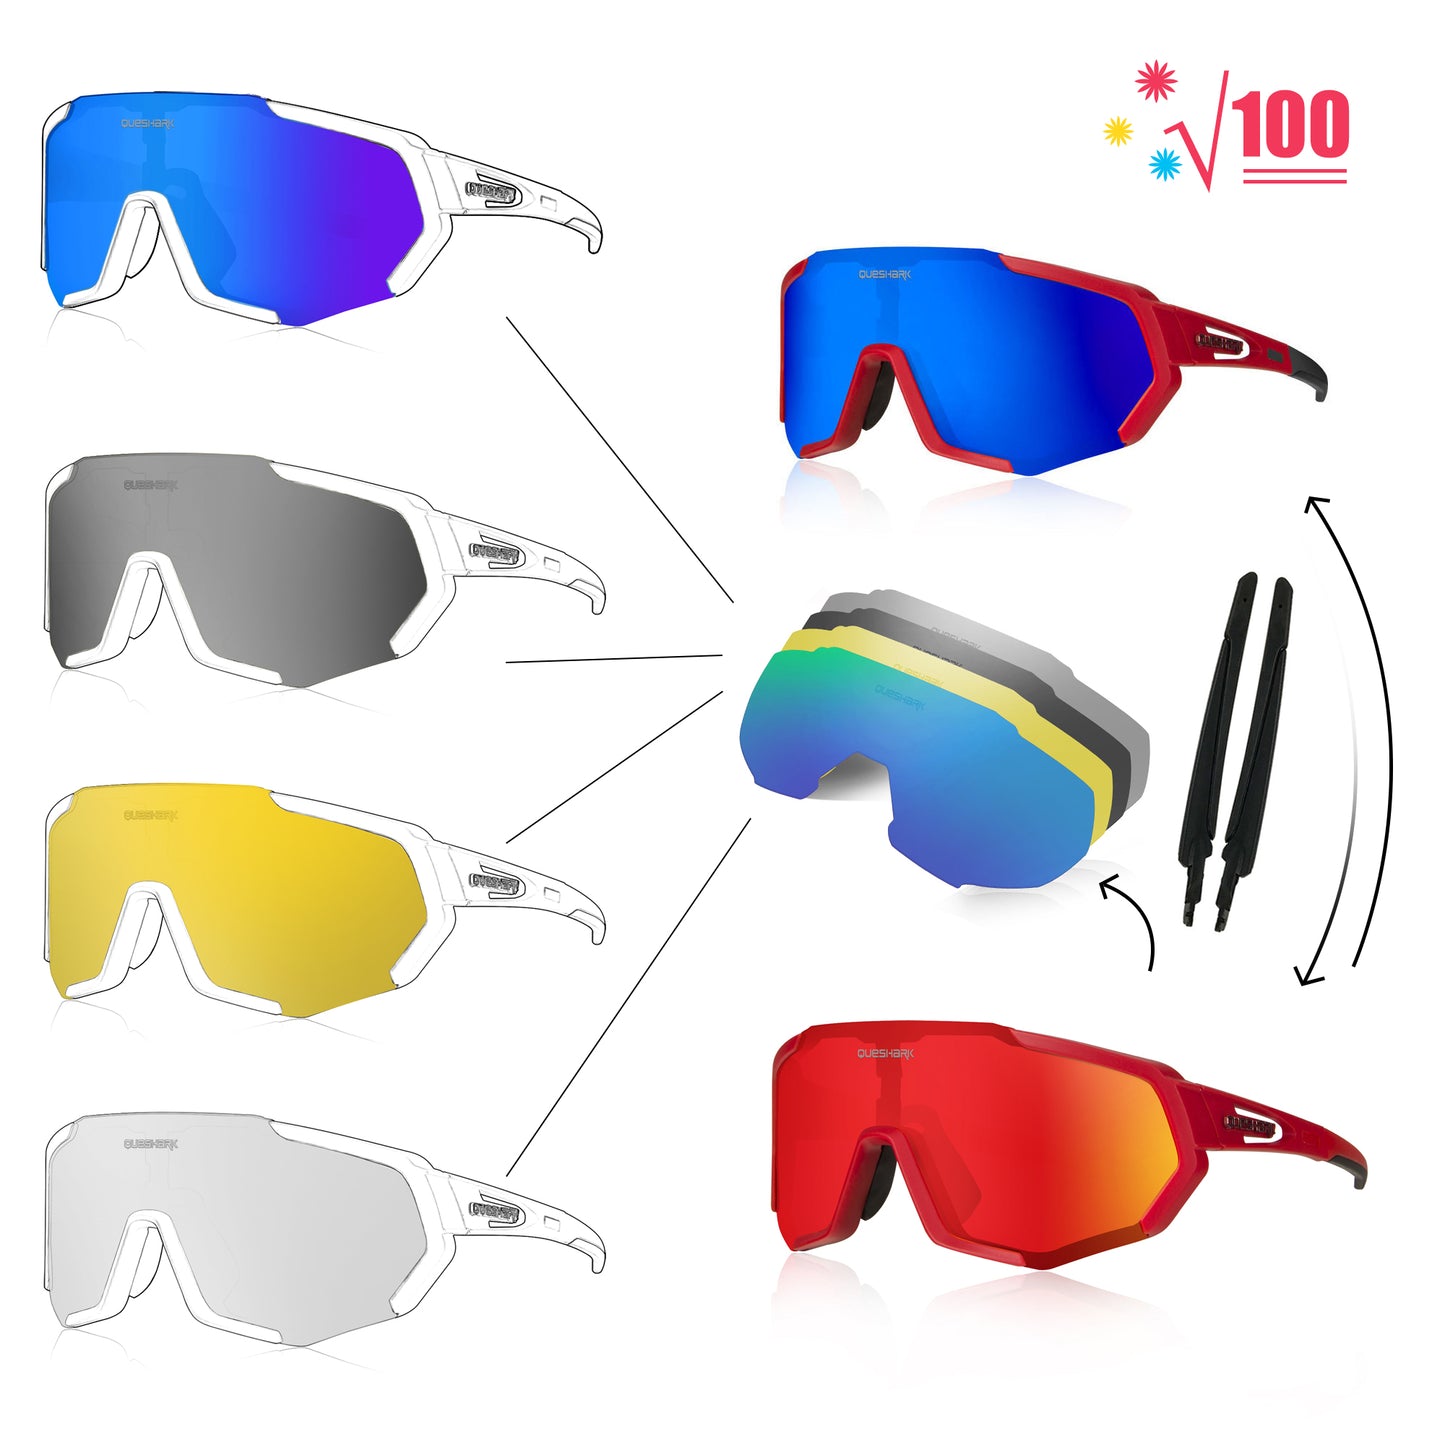 QE48 Red Polarized Glasses Bike Sunglasses Bicycle Goggles Cycling Eyewear UV400 5 Lens/Set